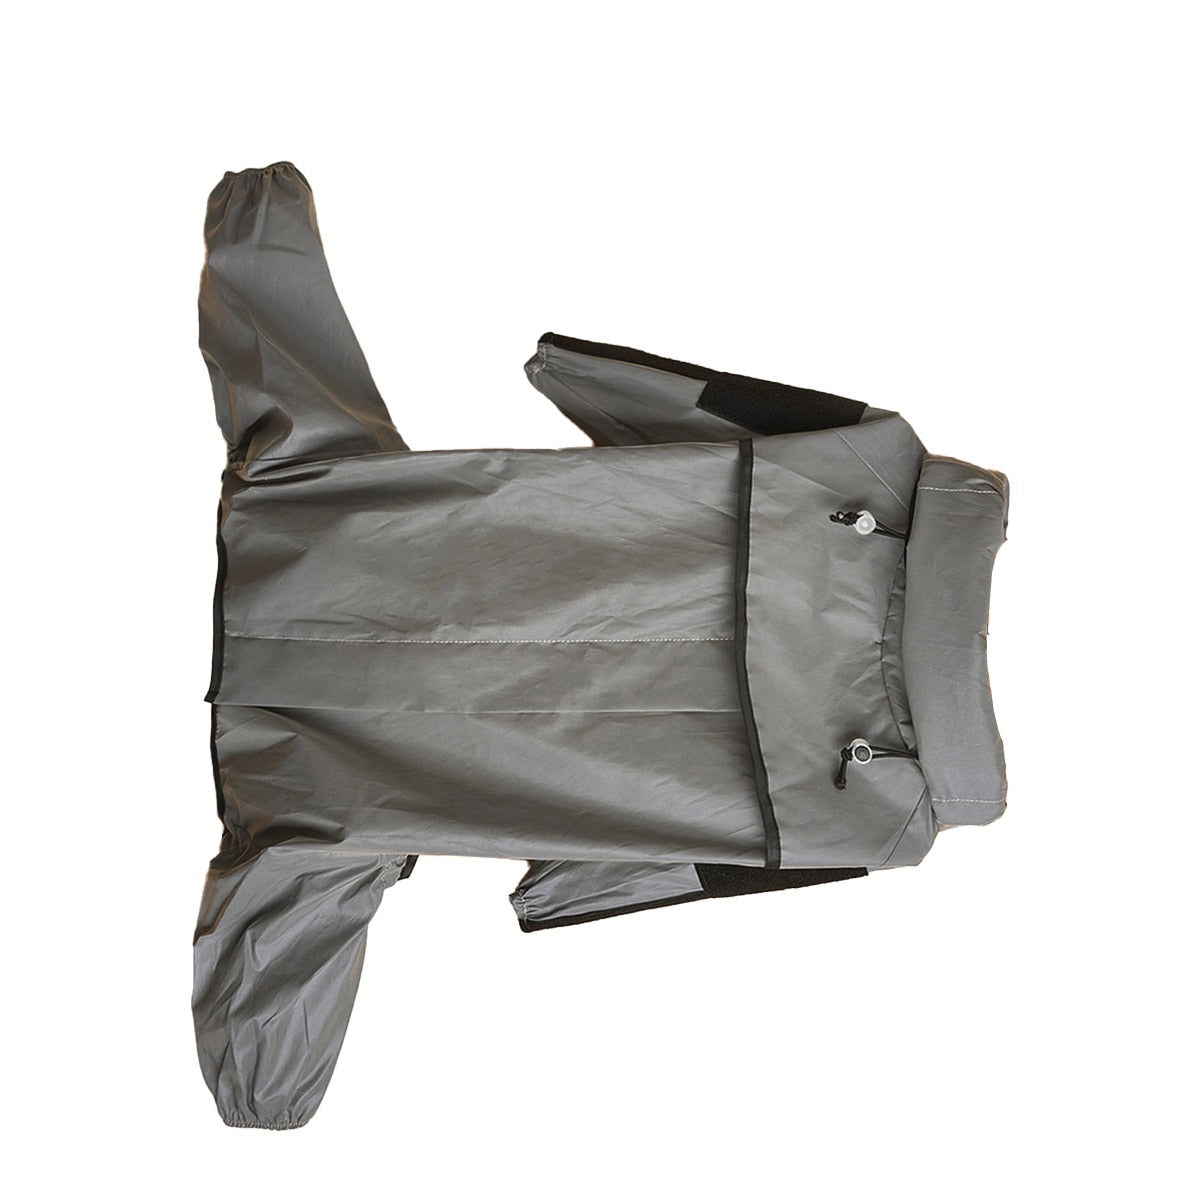 SafeCoat - Reflective All-weather Waterproof Dog Rain Coat